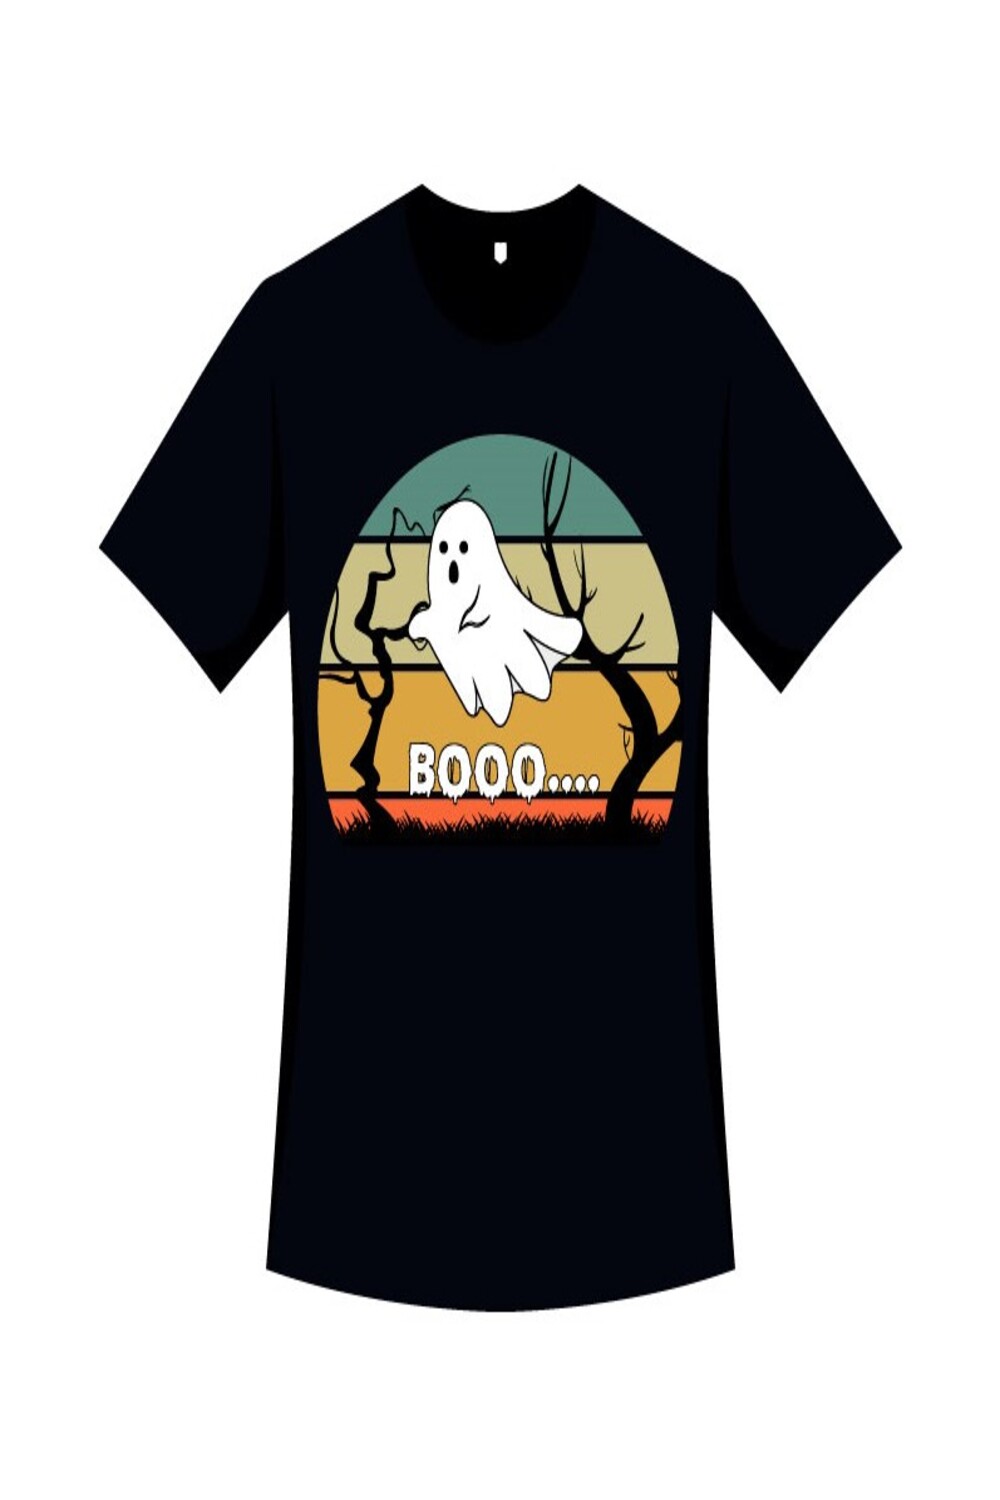 Halloween Retro T-shirt Vector Design Pinterest image.